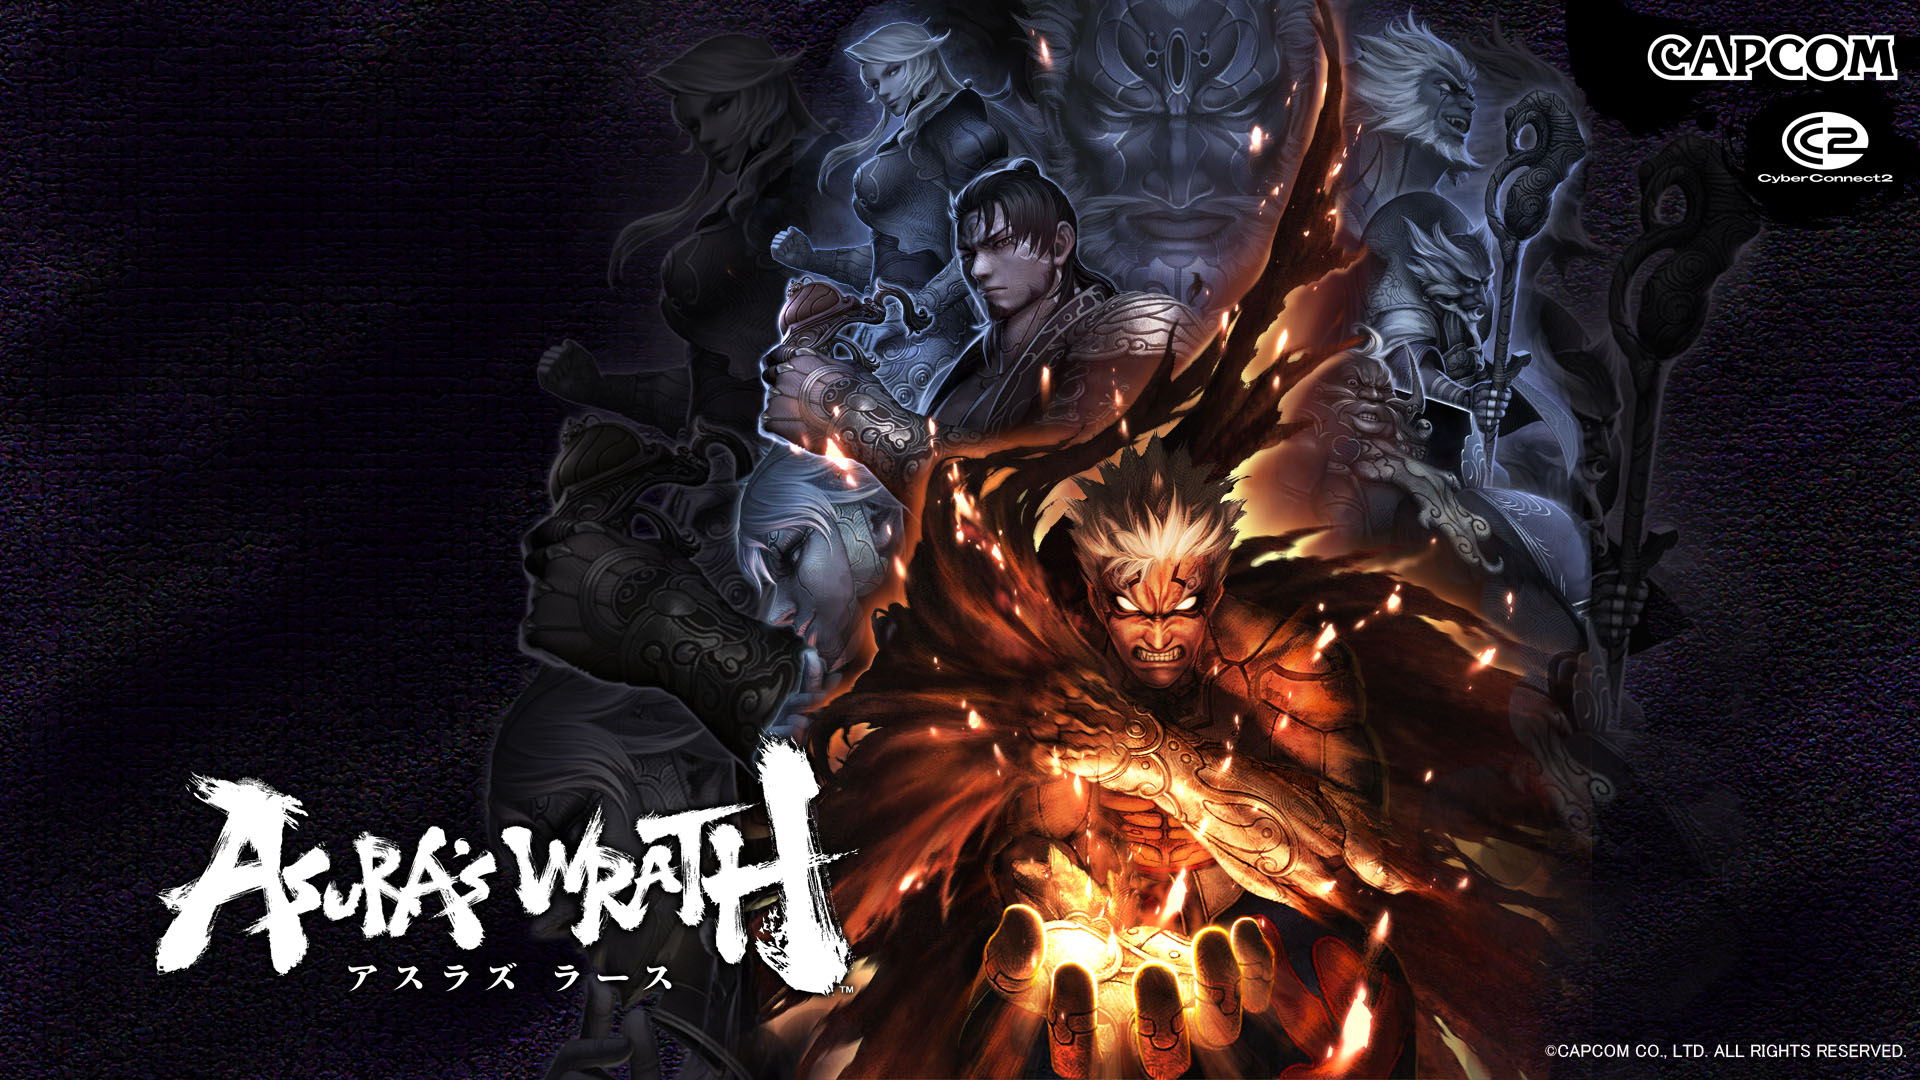 Wallpaper the game art Asuras Wrath images for desktop section игры   download